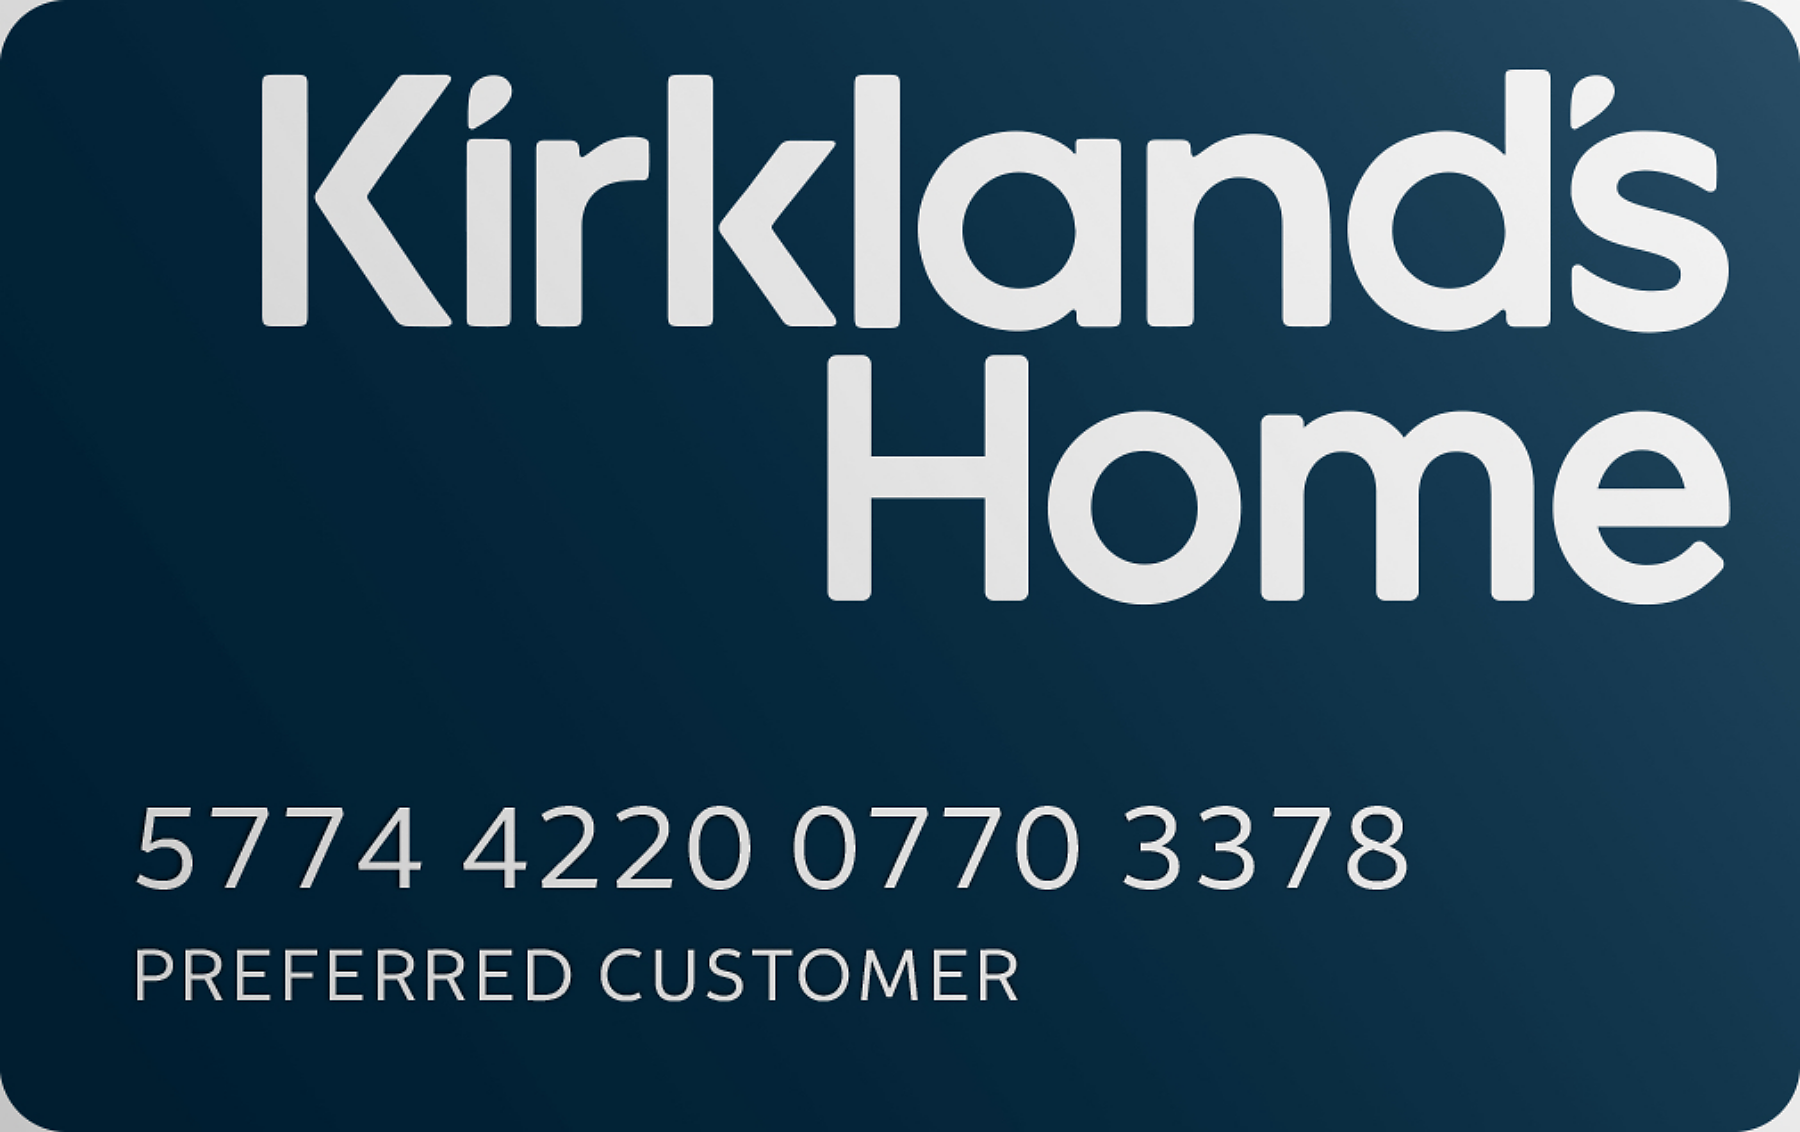 Kirkland's Credit Card